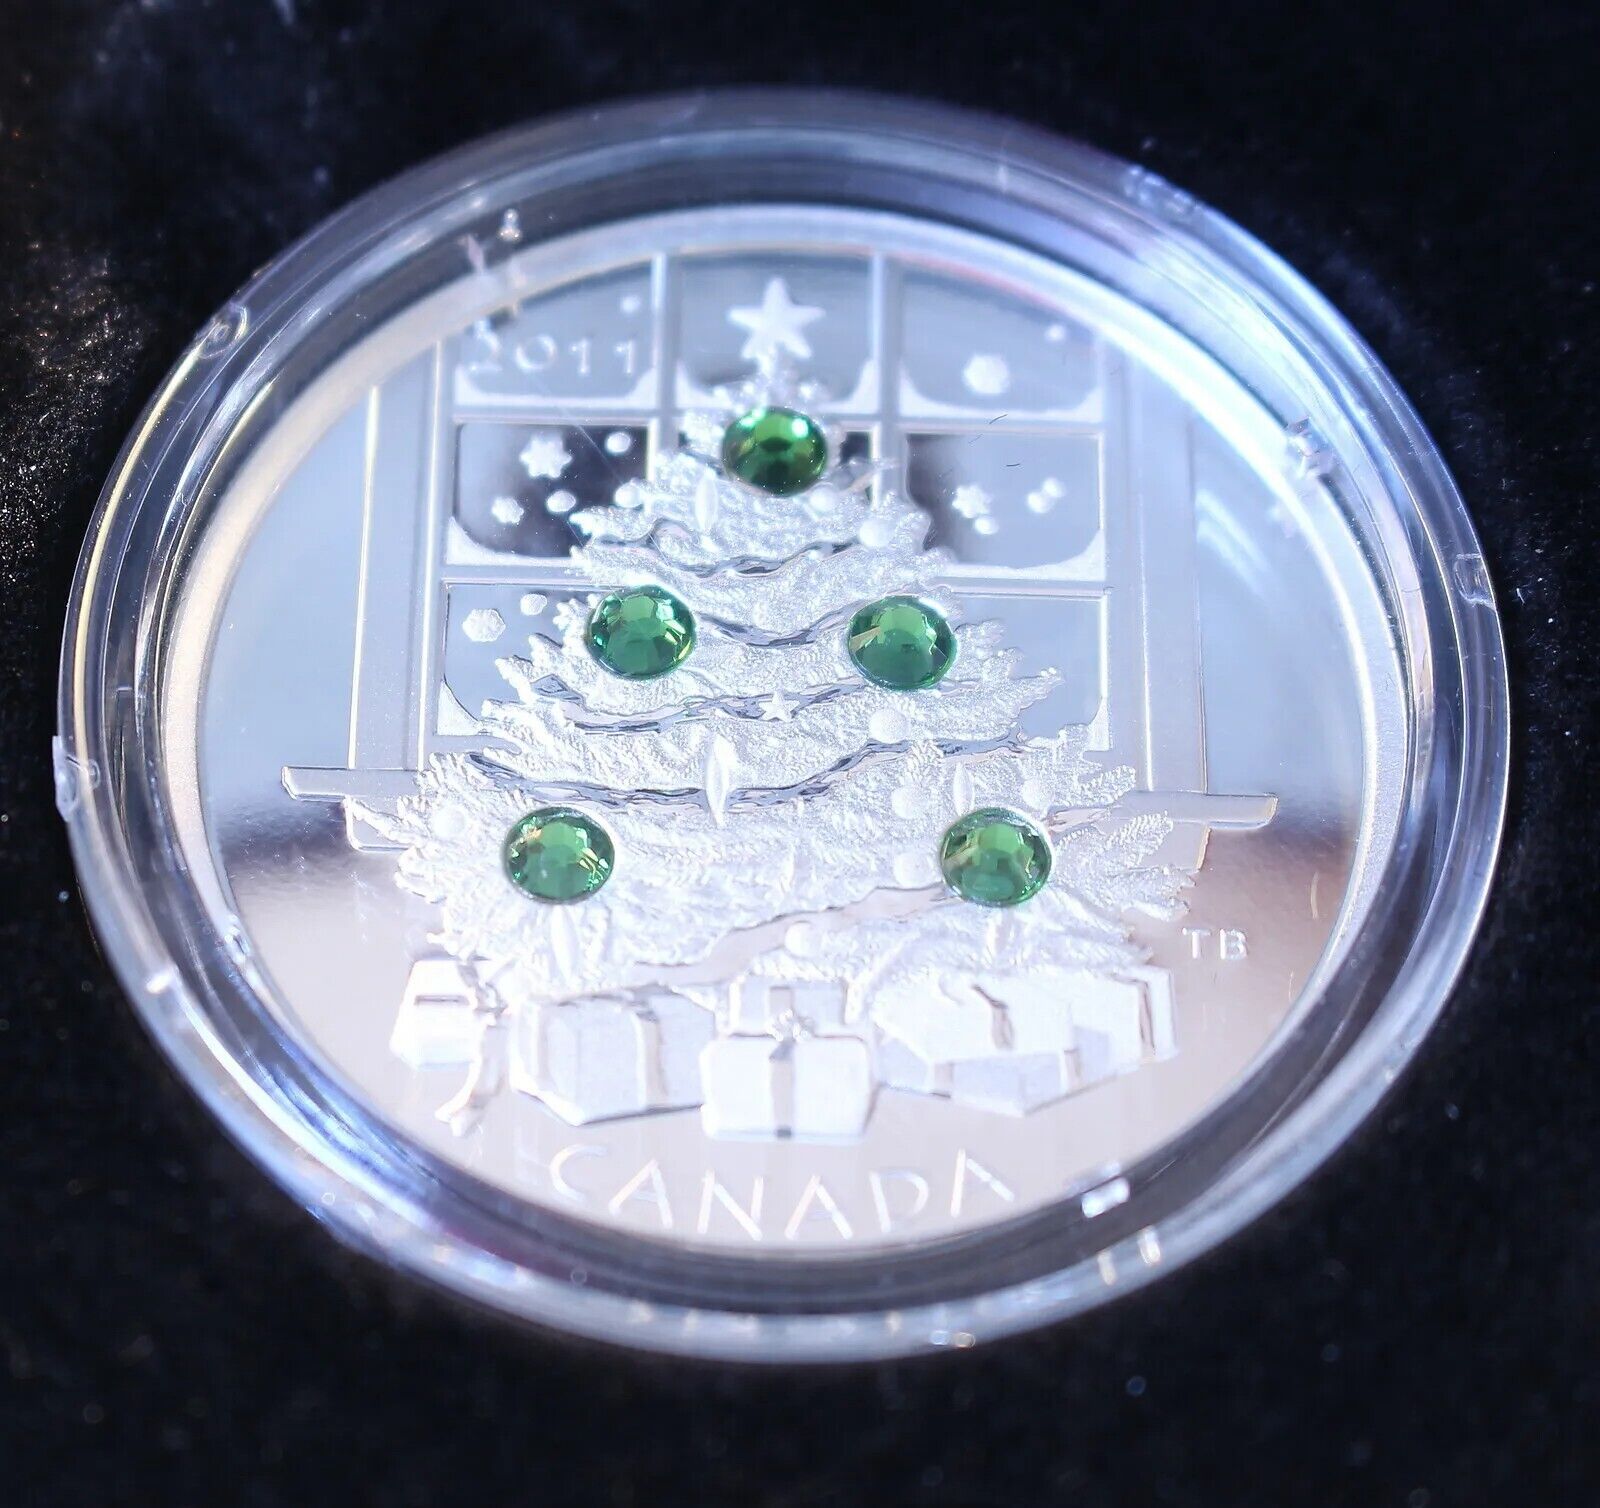 1 Oz Silver Coin 2011 $20 Canada Christmas Tree Green Swarovski Crystals-classypw.com-2